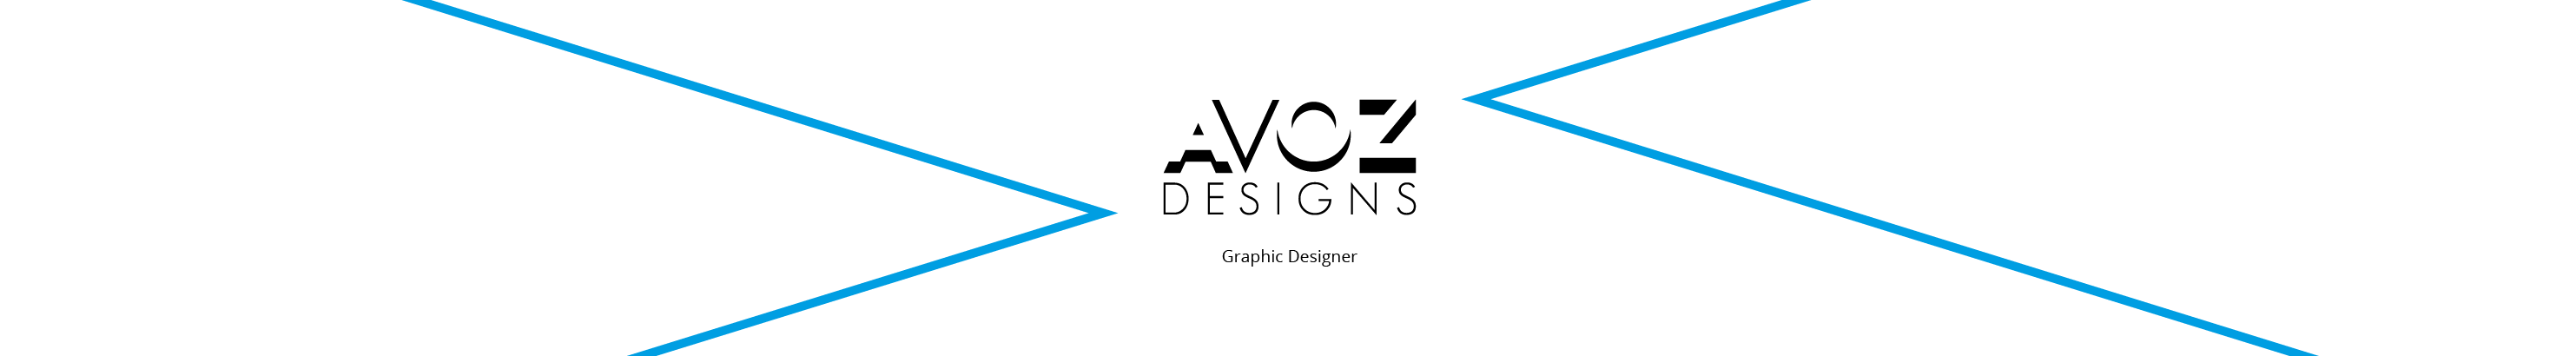 Avoz Designs's profile banner